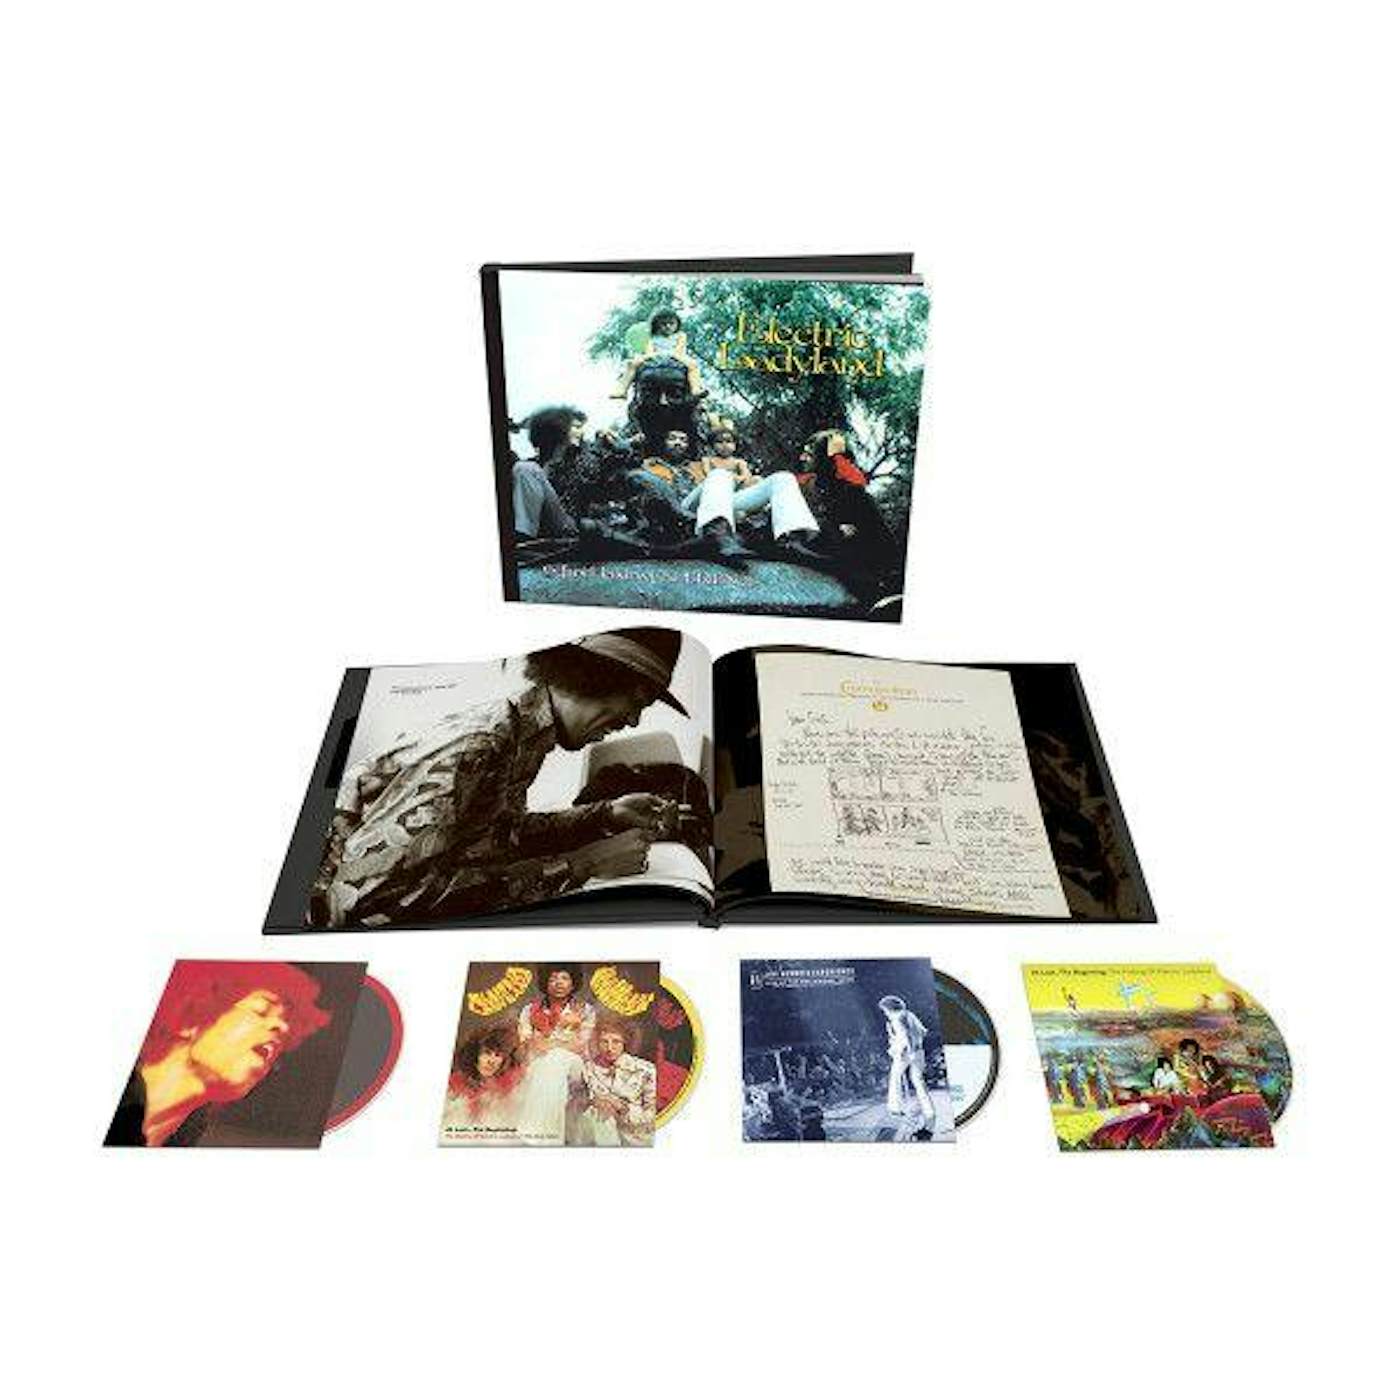 Jimi Hendrix ELECTRIC LADYLAND: 50TH ANNIVERSARY DELUXE EDITION Vinyl Record Box Set